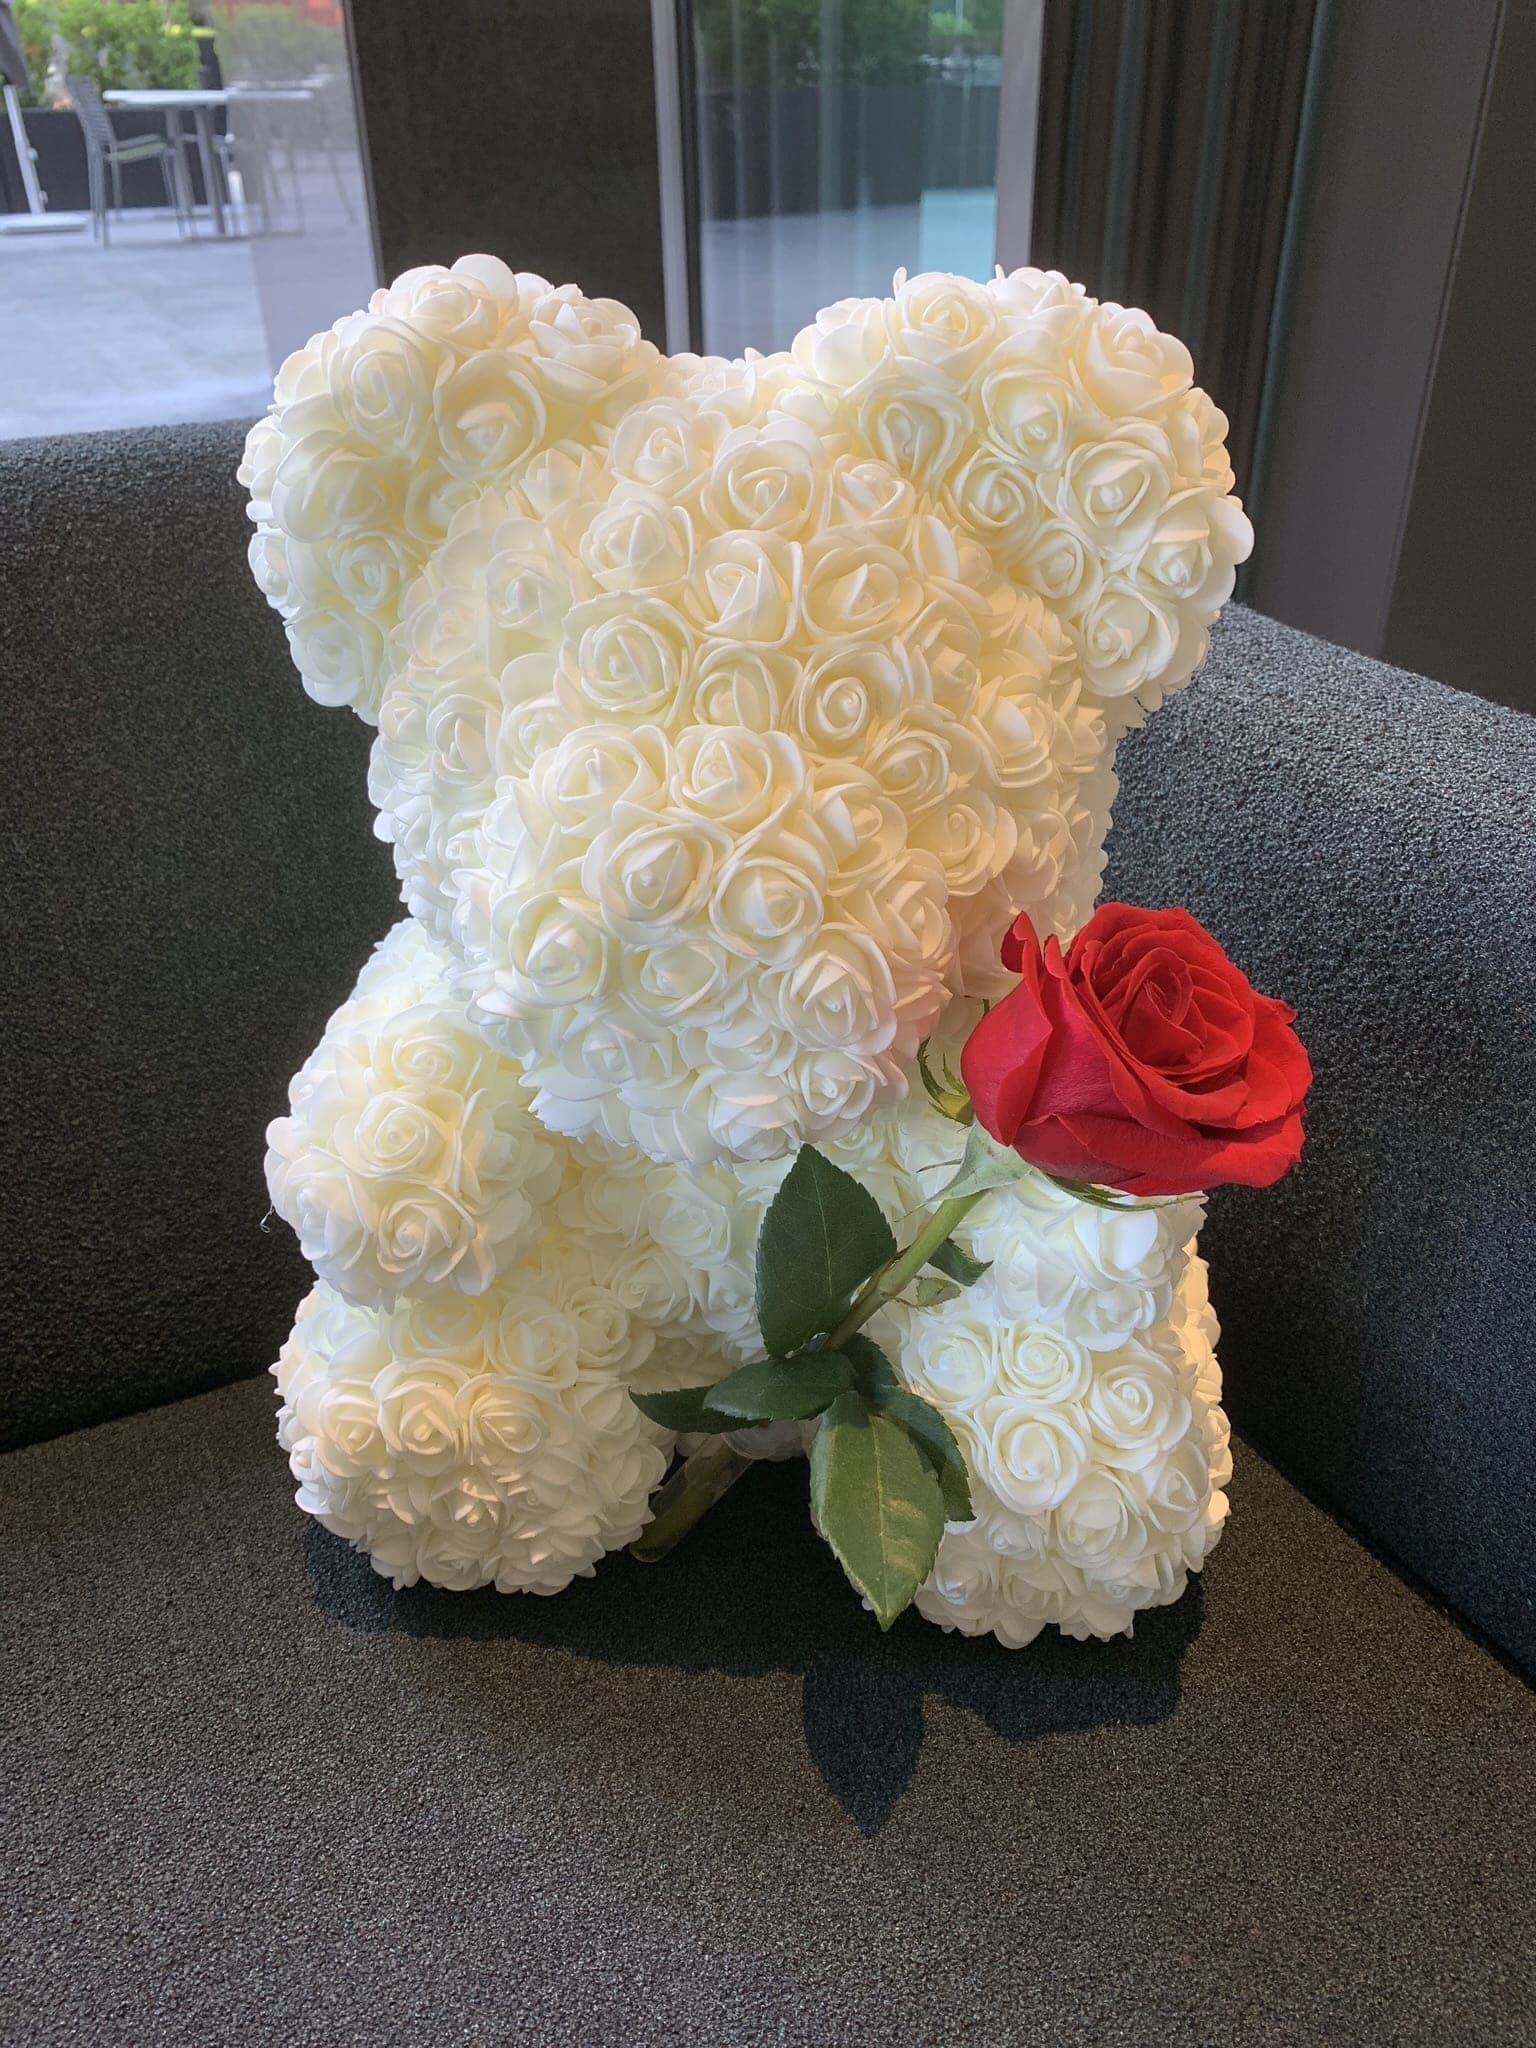 Forever Rose Teddy Bear in Los Angeles, CA | Downtown Flowers net